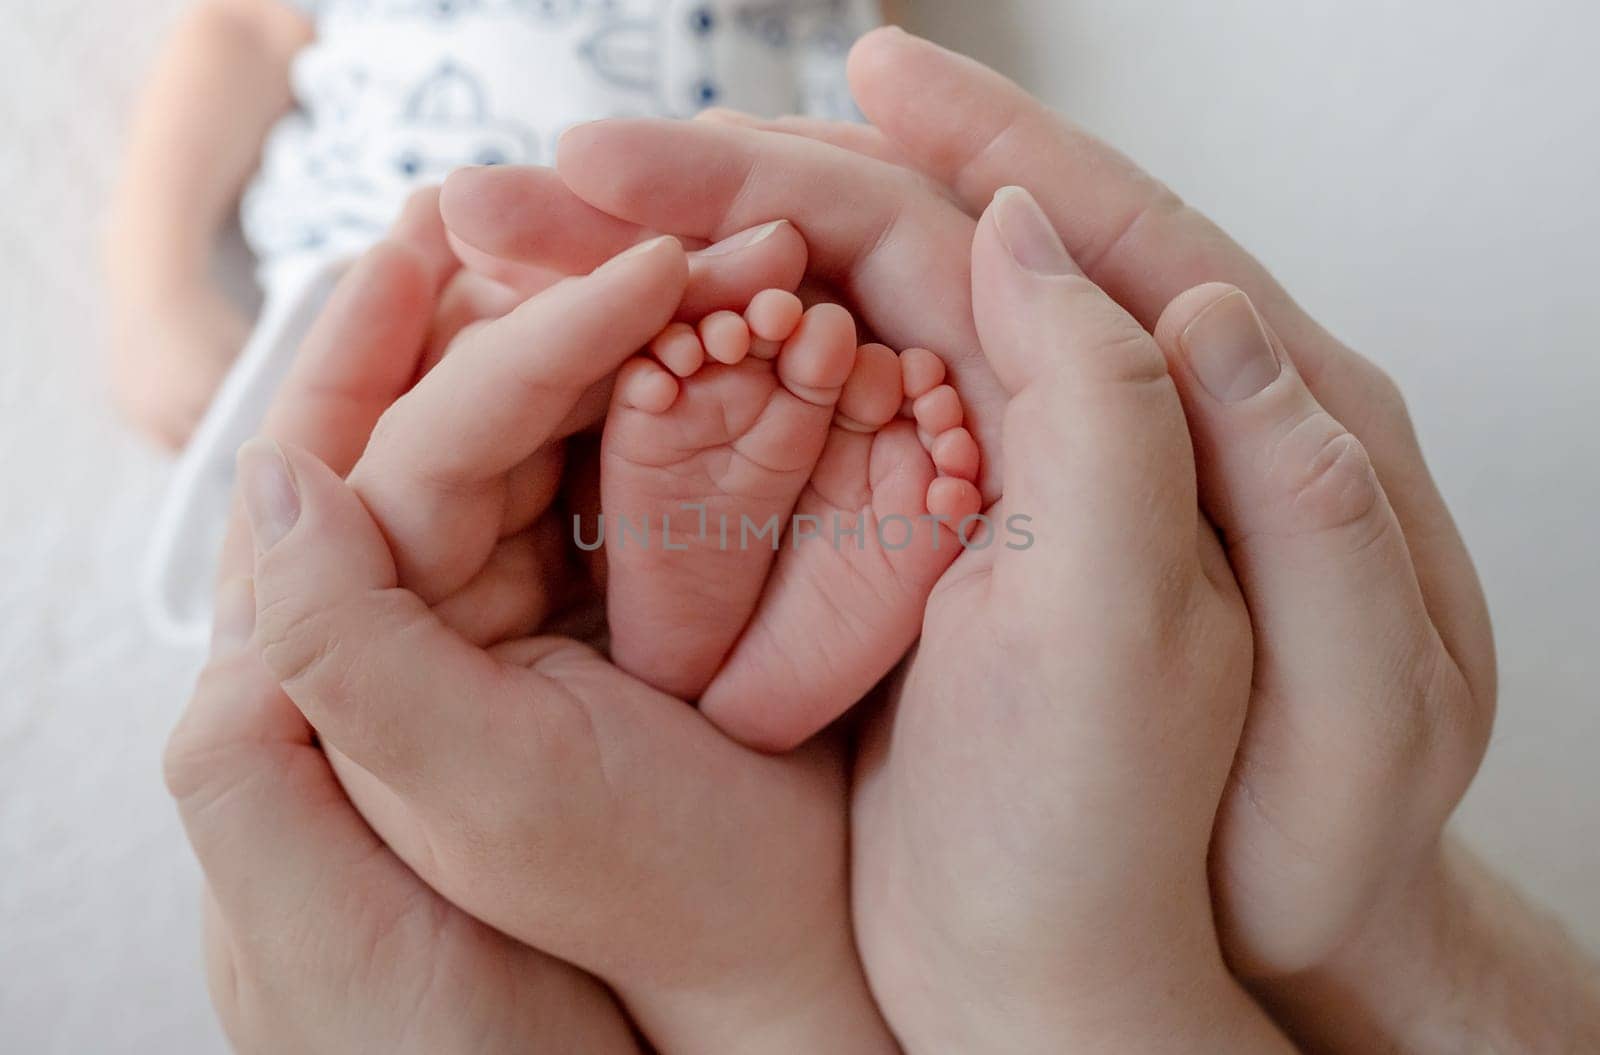 Parents Cradle Newborn Baby'S Tiny Legs In Their Hands